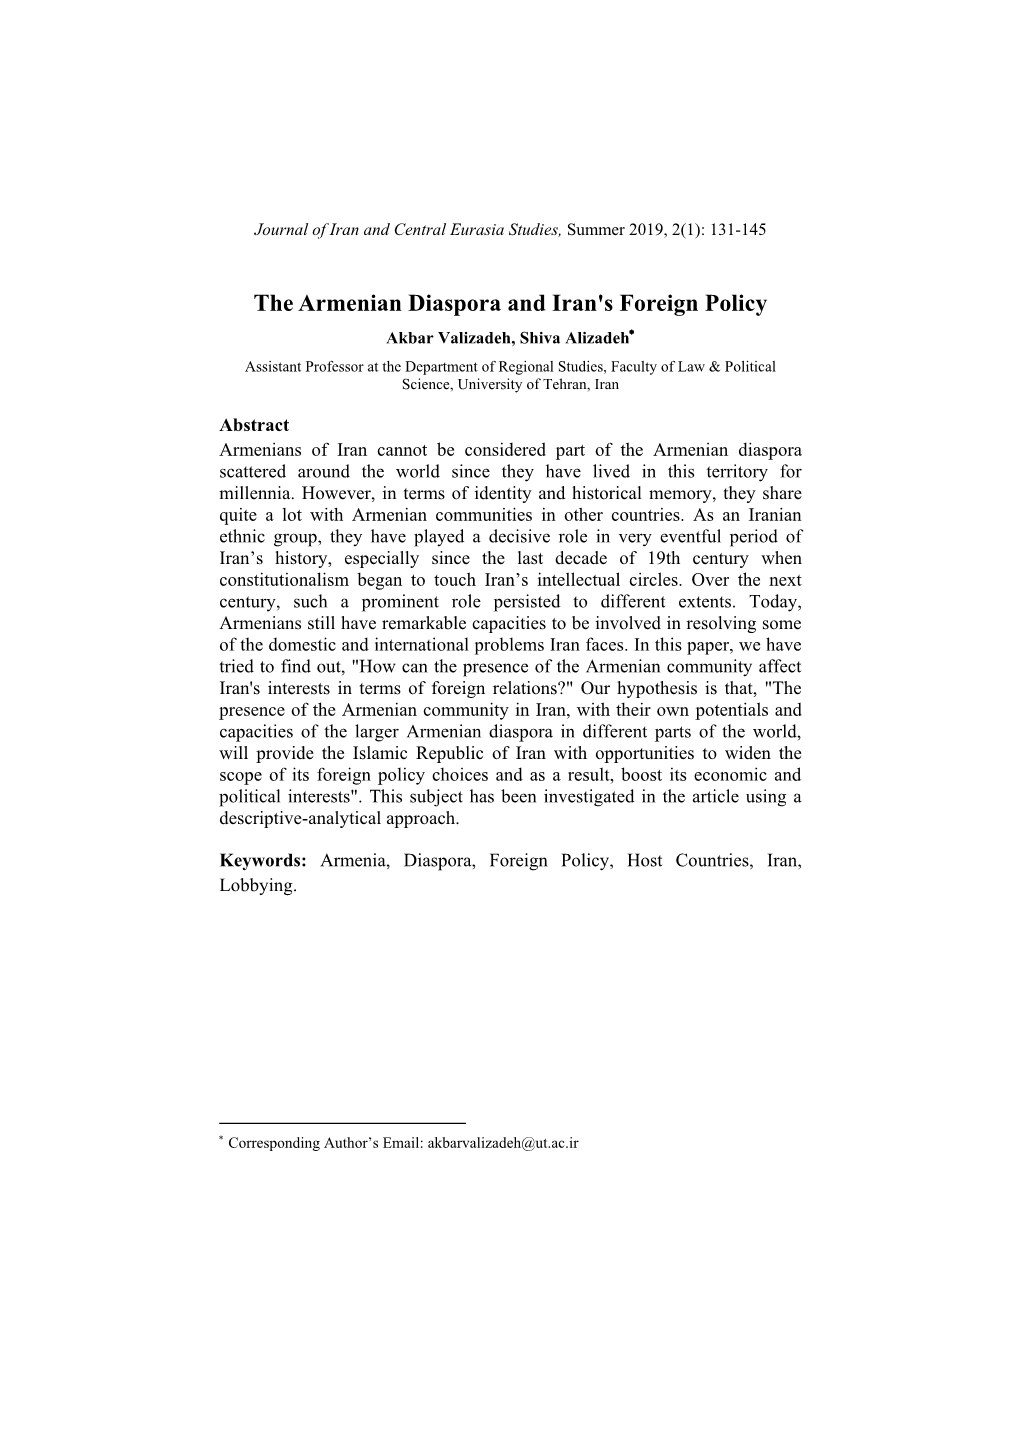 The Armenian Diaspora and Iran's Foreign Policy